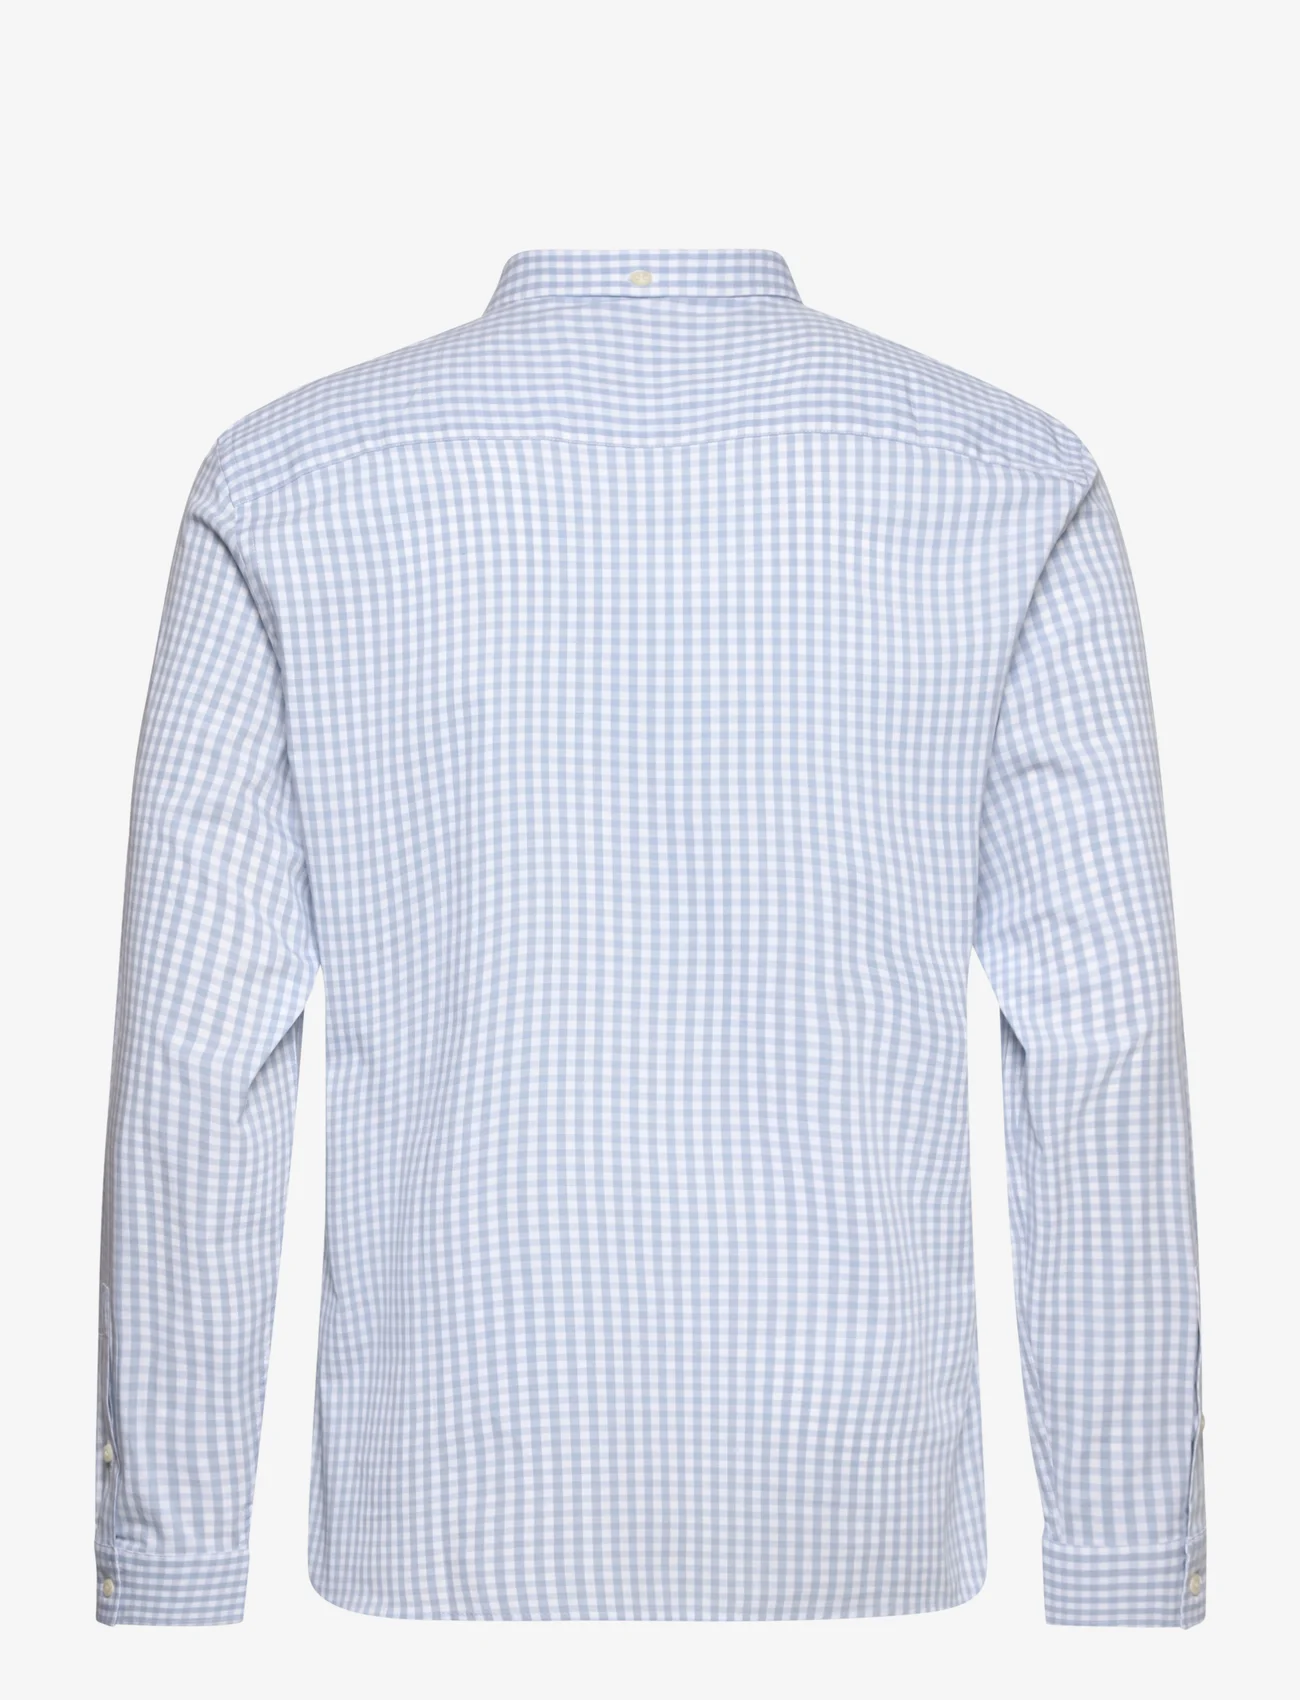 Lyle & Scott - LS Slim Fit Gingham Shirt - koszule w kratkę - light blue/ white - 1